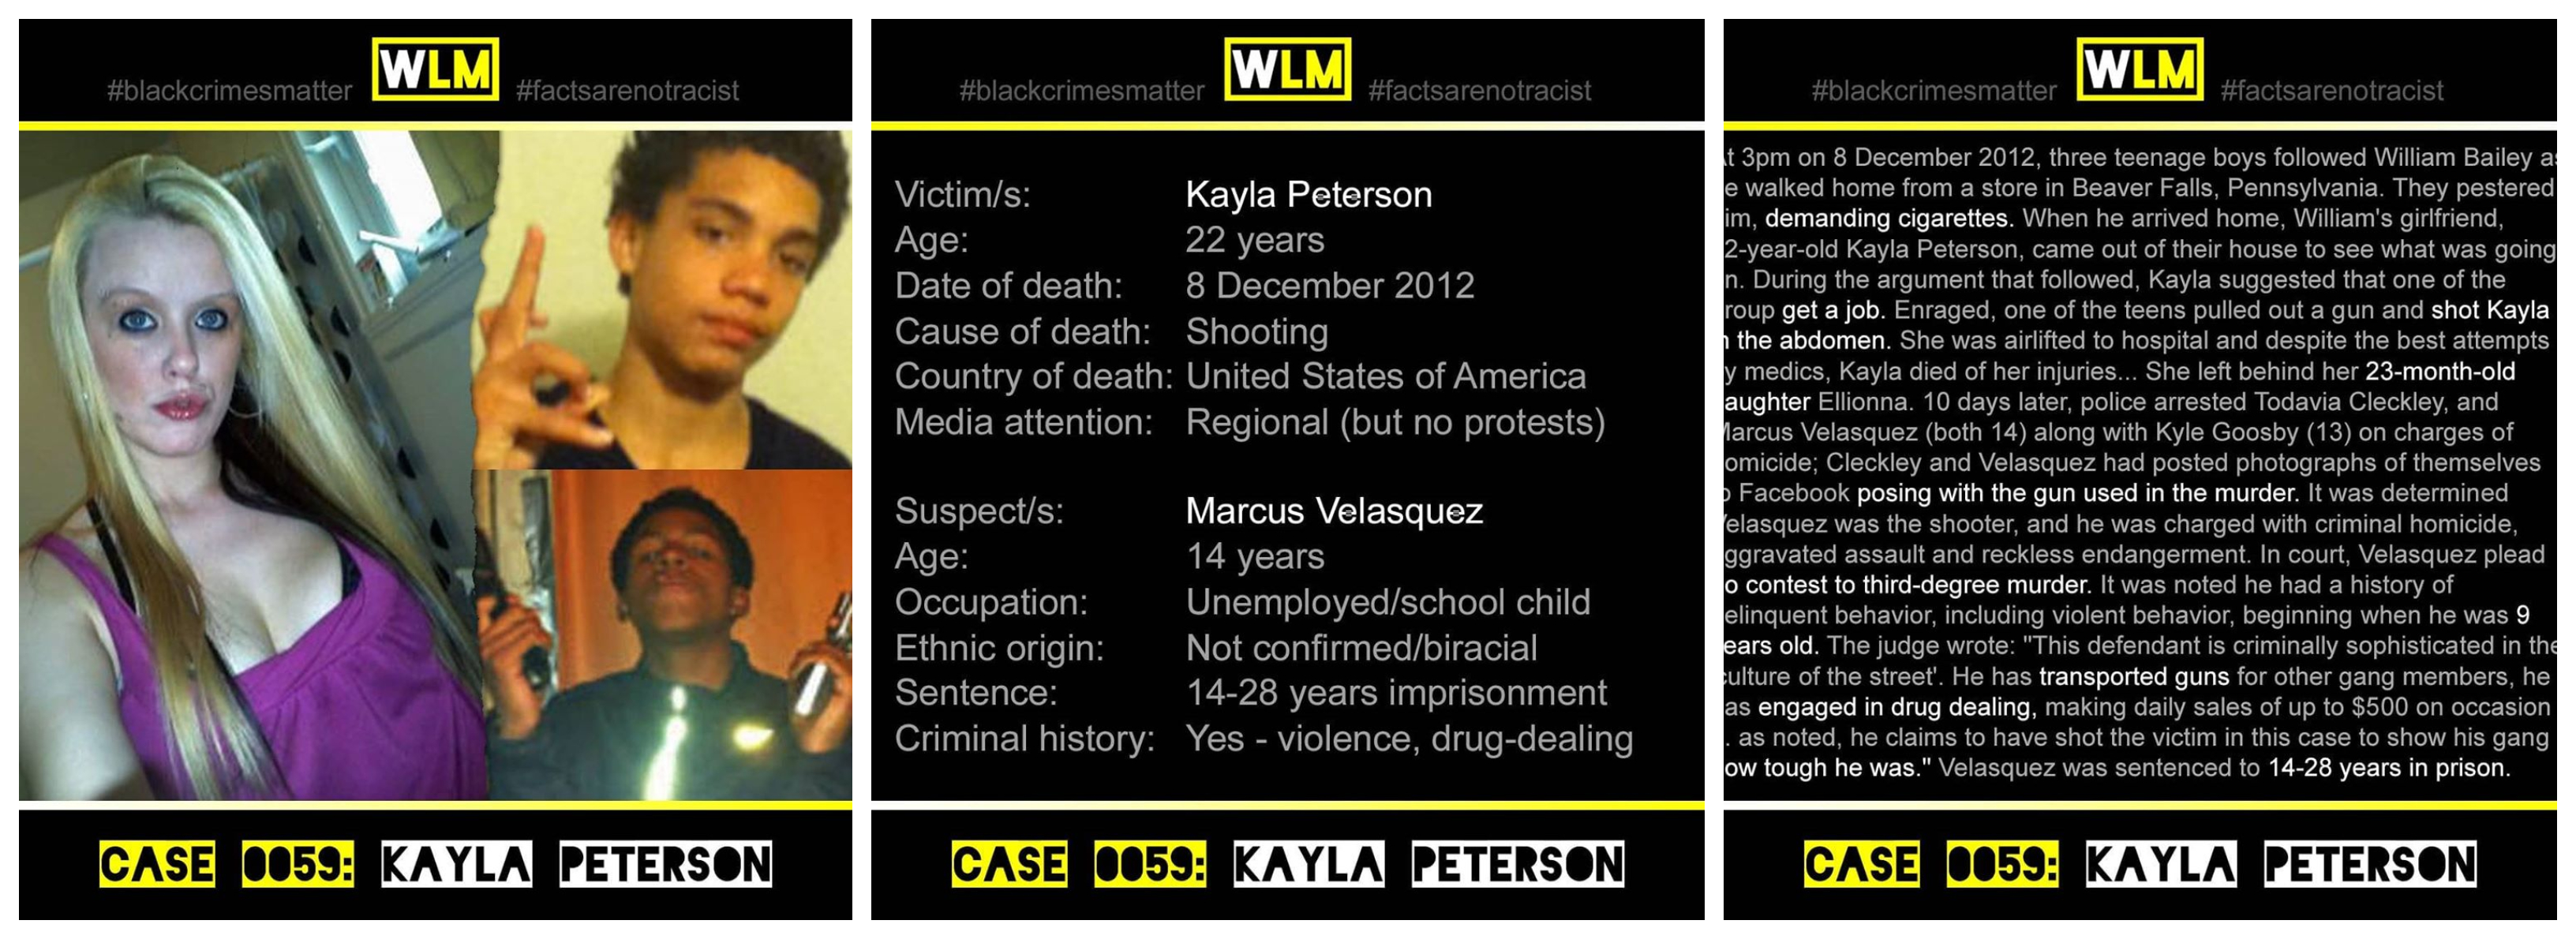 case-059-kayla-peterson